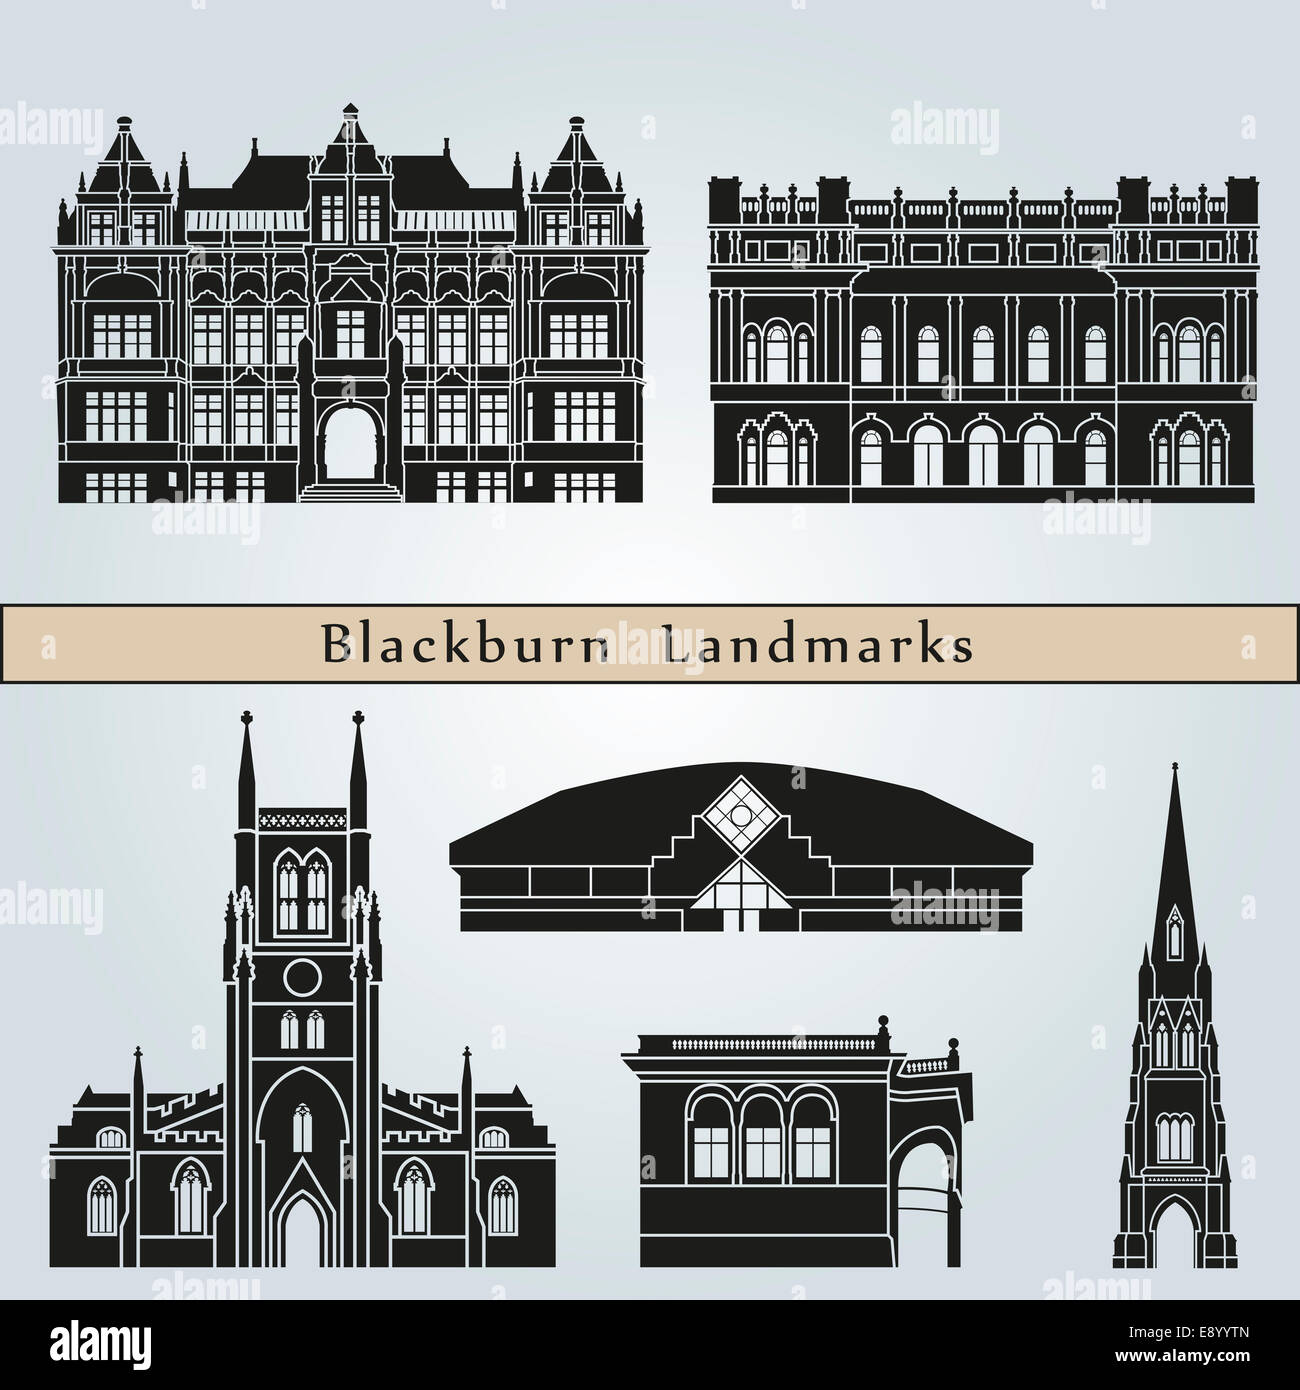 Blackburn landmarks and monuments Stock Photo